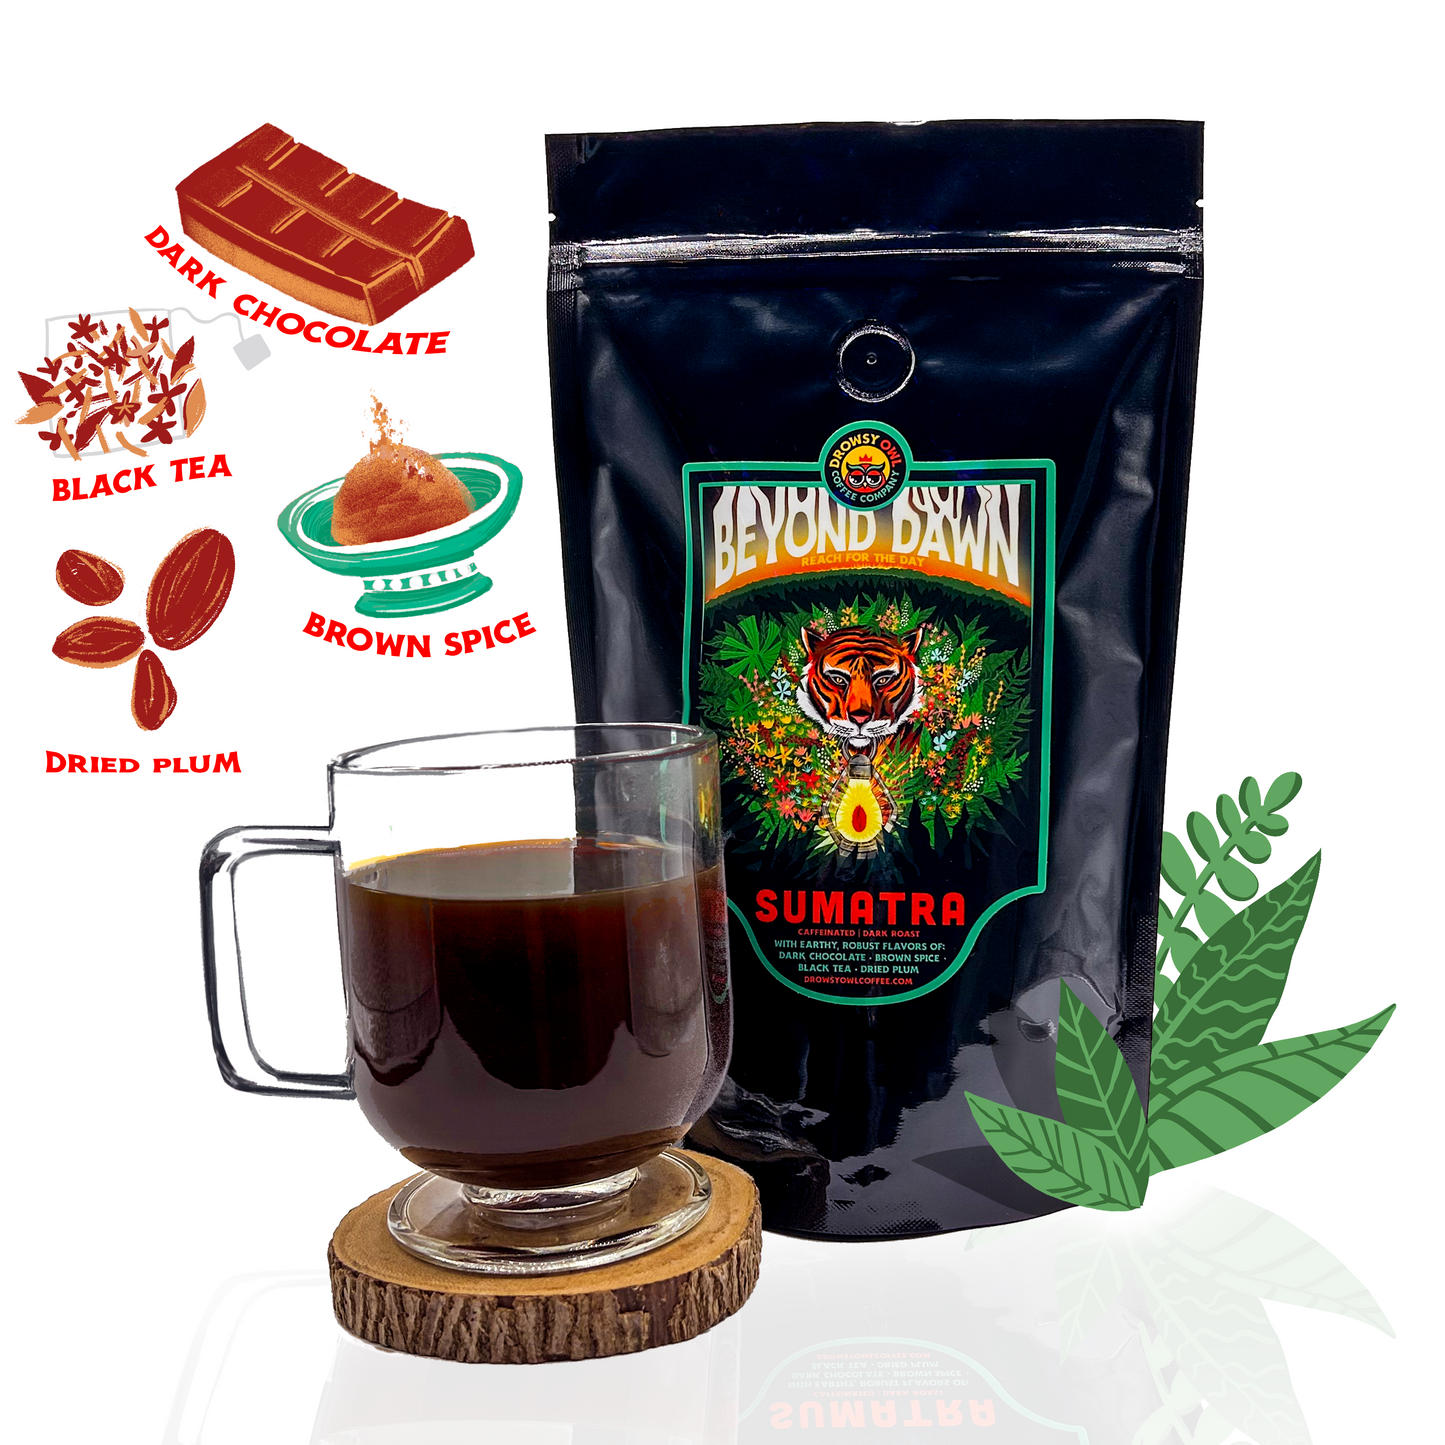 Beyond Dawn Sumatra Coffee